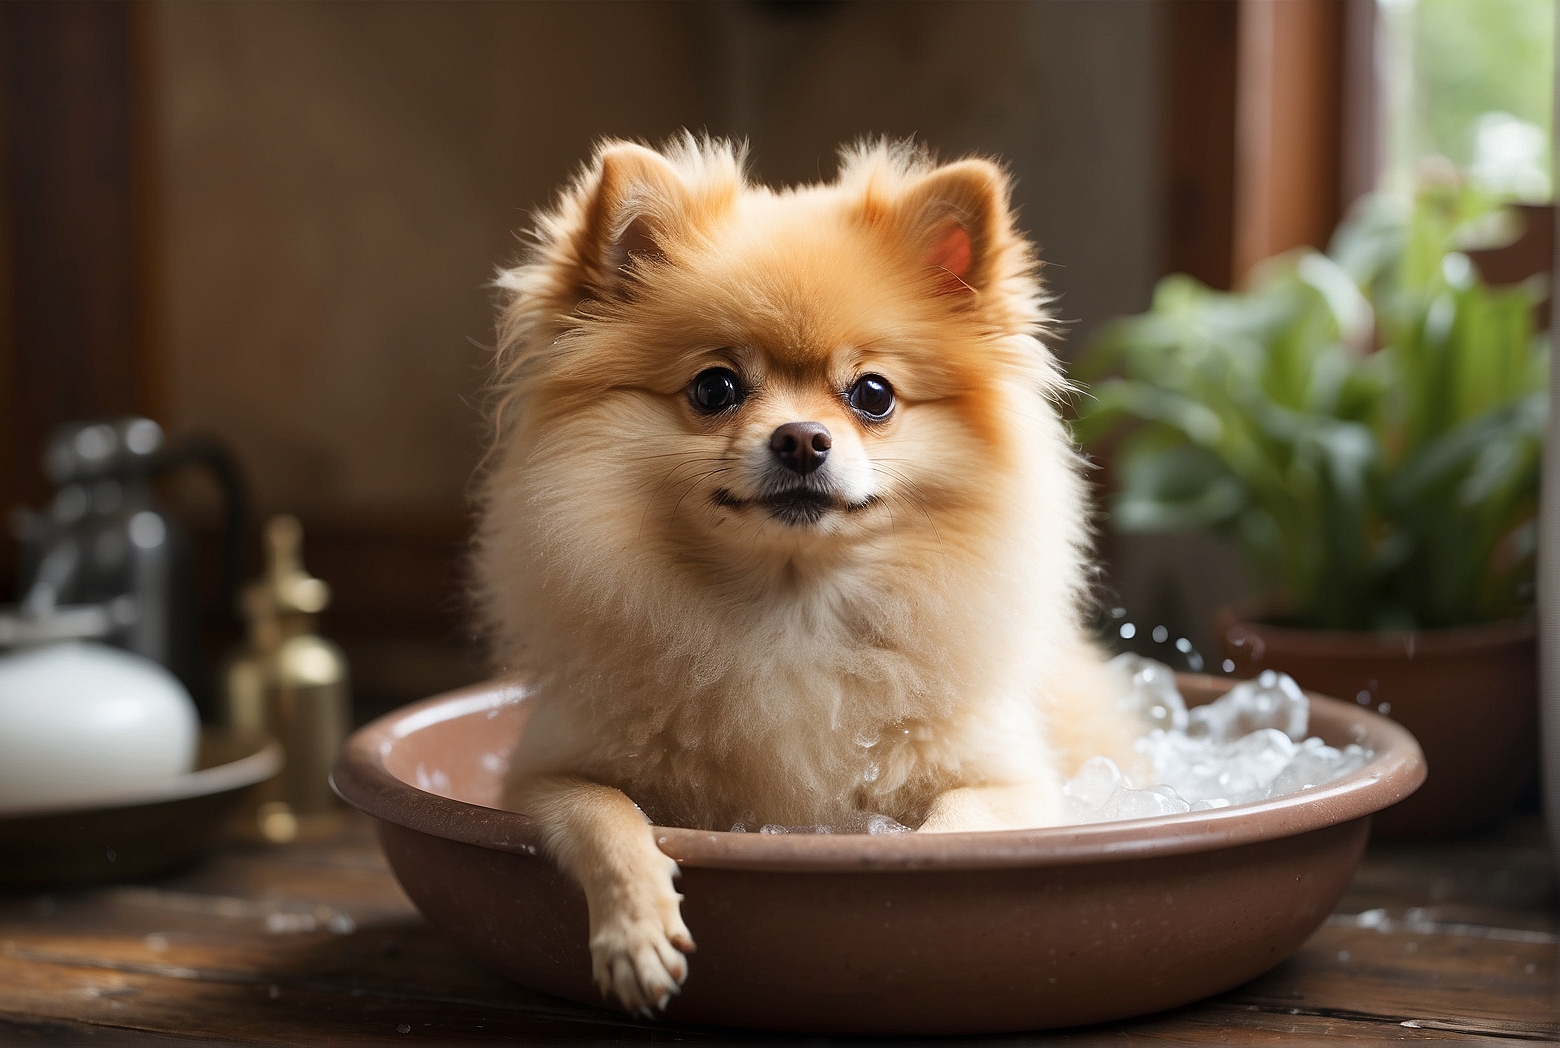 How often should you bathe a Pomeranian?